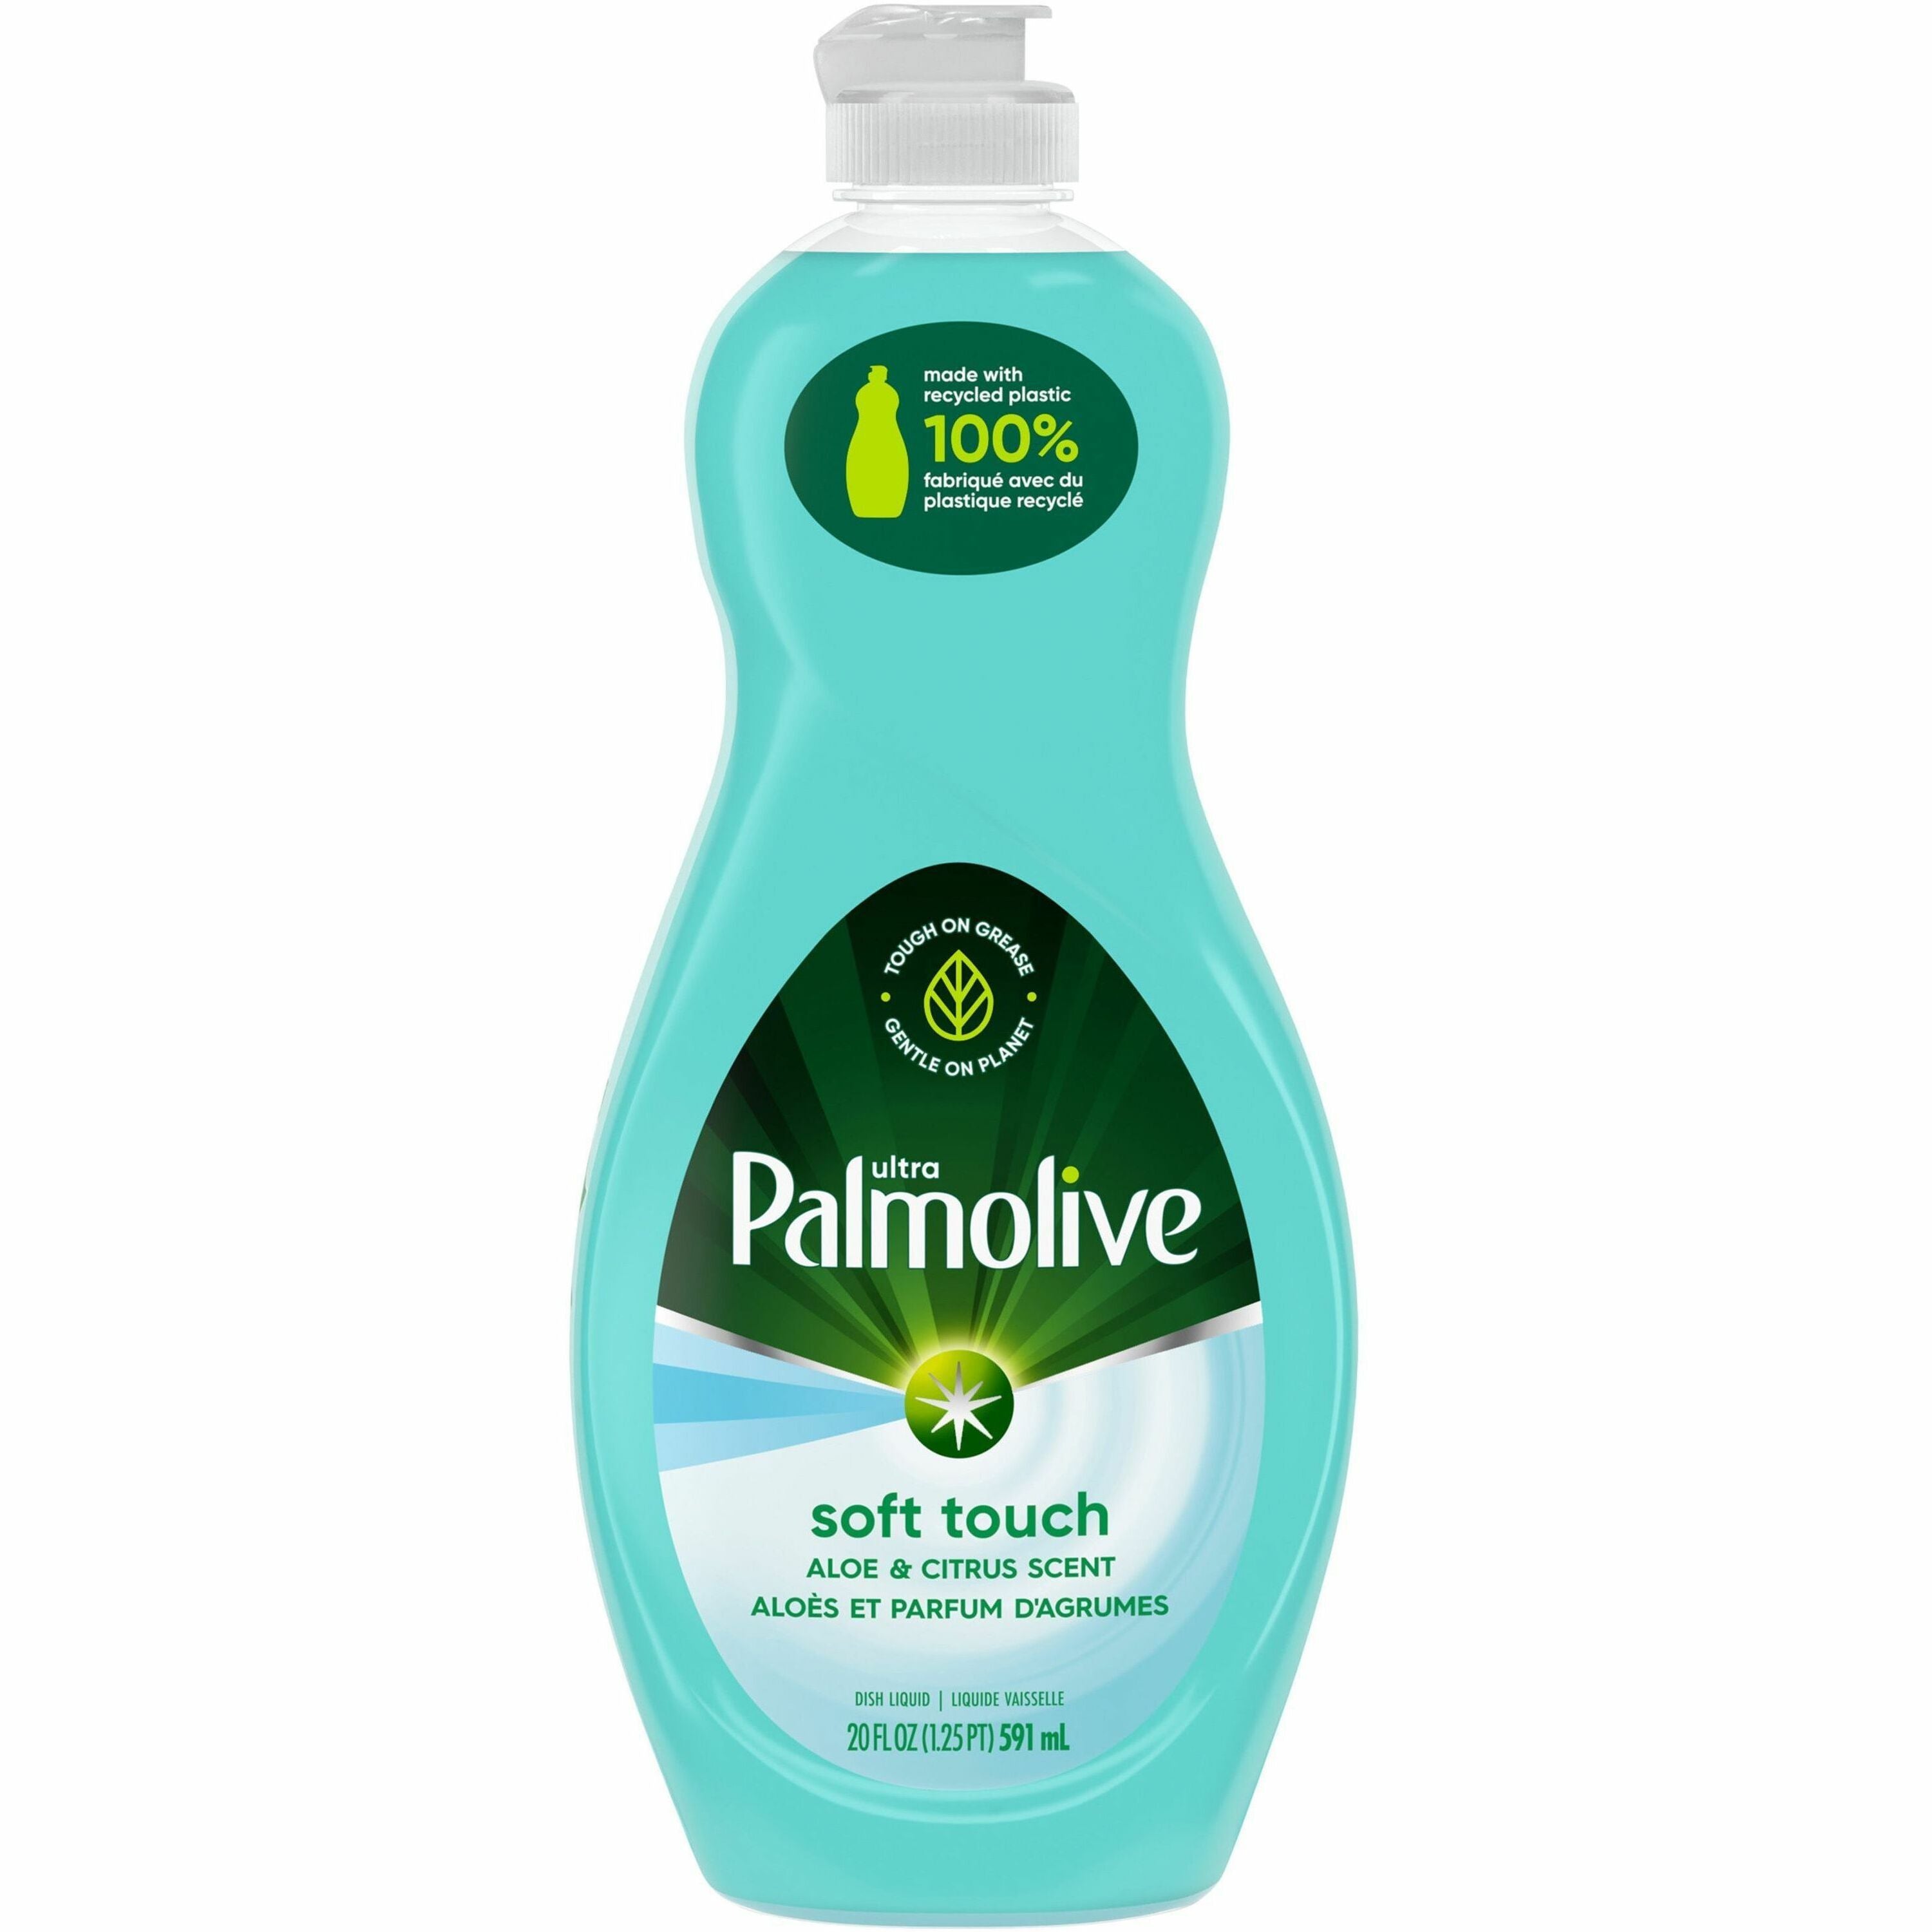 Palmolive Ultra Liquid Dish Soap - 20 fl oz (0.6 quart) - Aloe & Citrus Scent - 9 / Carton - Phosphate-free, Paraben-free, Eco-friendly, Biodegradable - Clear - 1